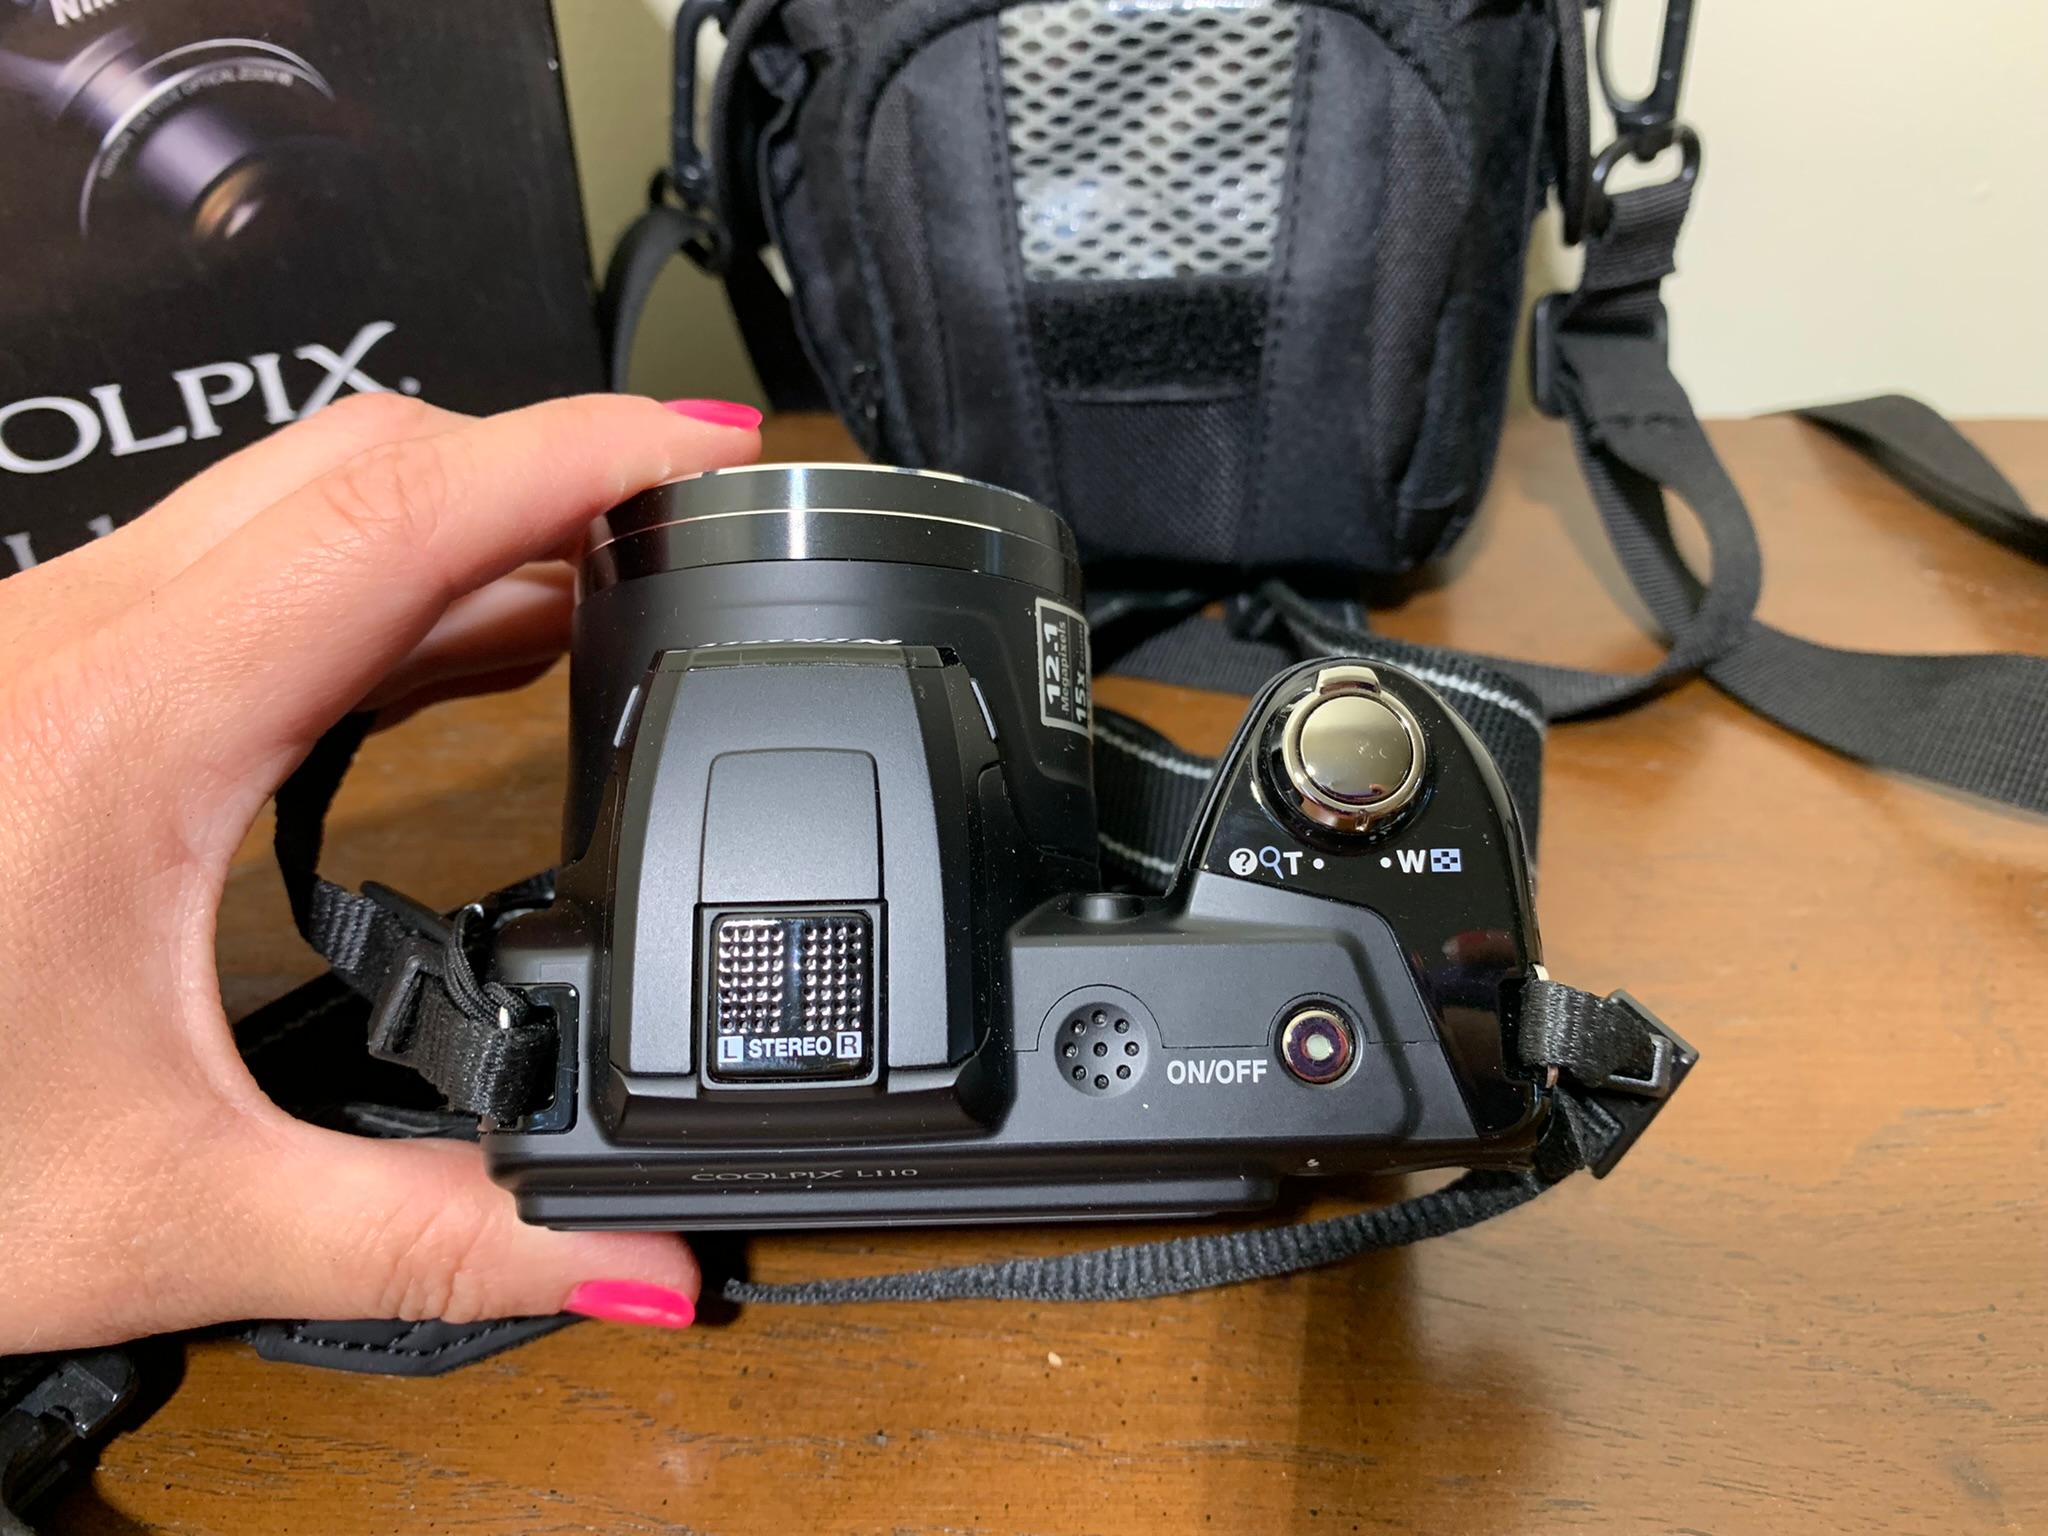 Nikon Coolpix L110 Camera with Bag